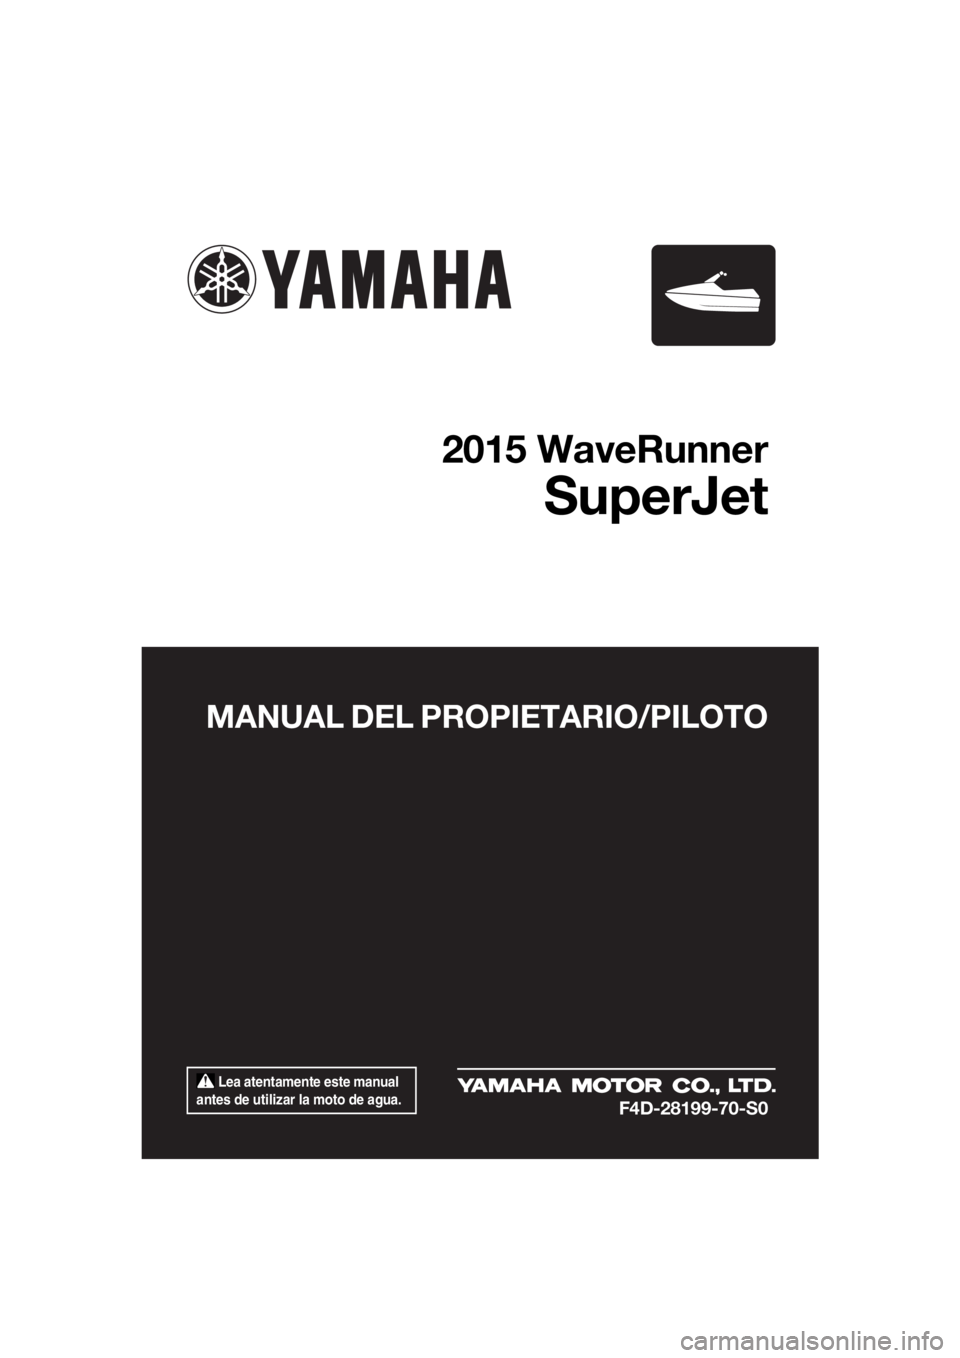 YAMAHA SUPERJET 2015  Manuale de Empleo (in Spanish) 